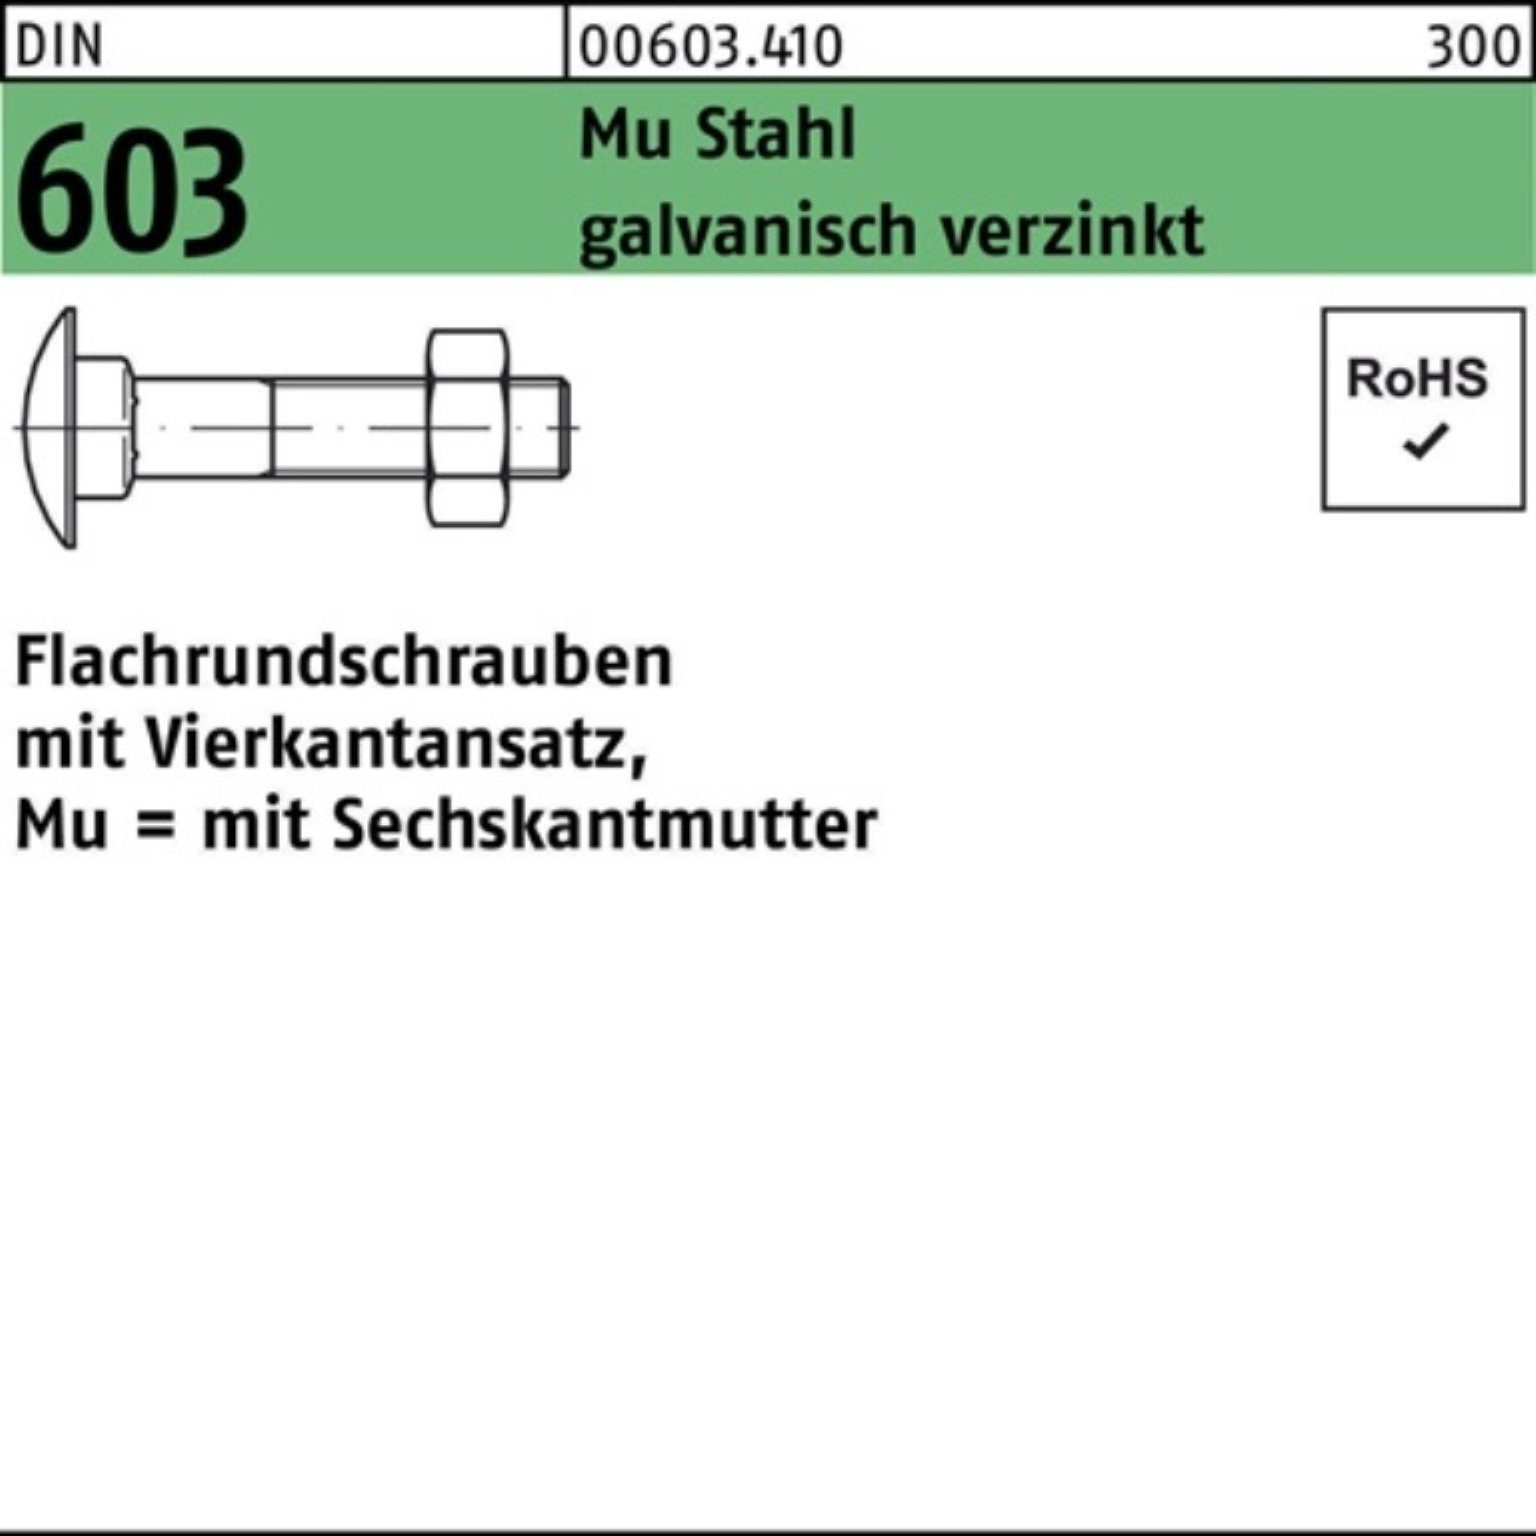 DIN Vierkantansatz/6-ktmutter M5x25 500er Pack 603 Reyher Flachrundschraube Schraube M